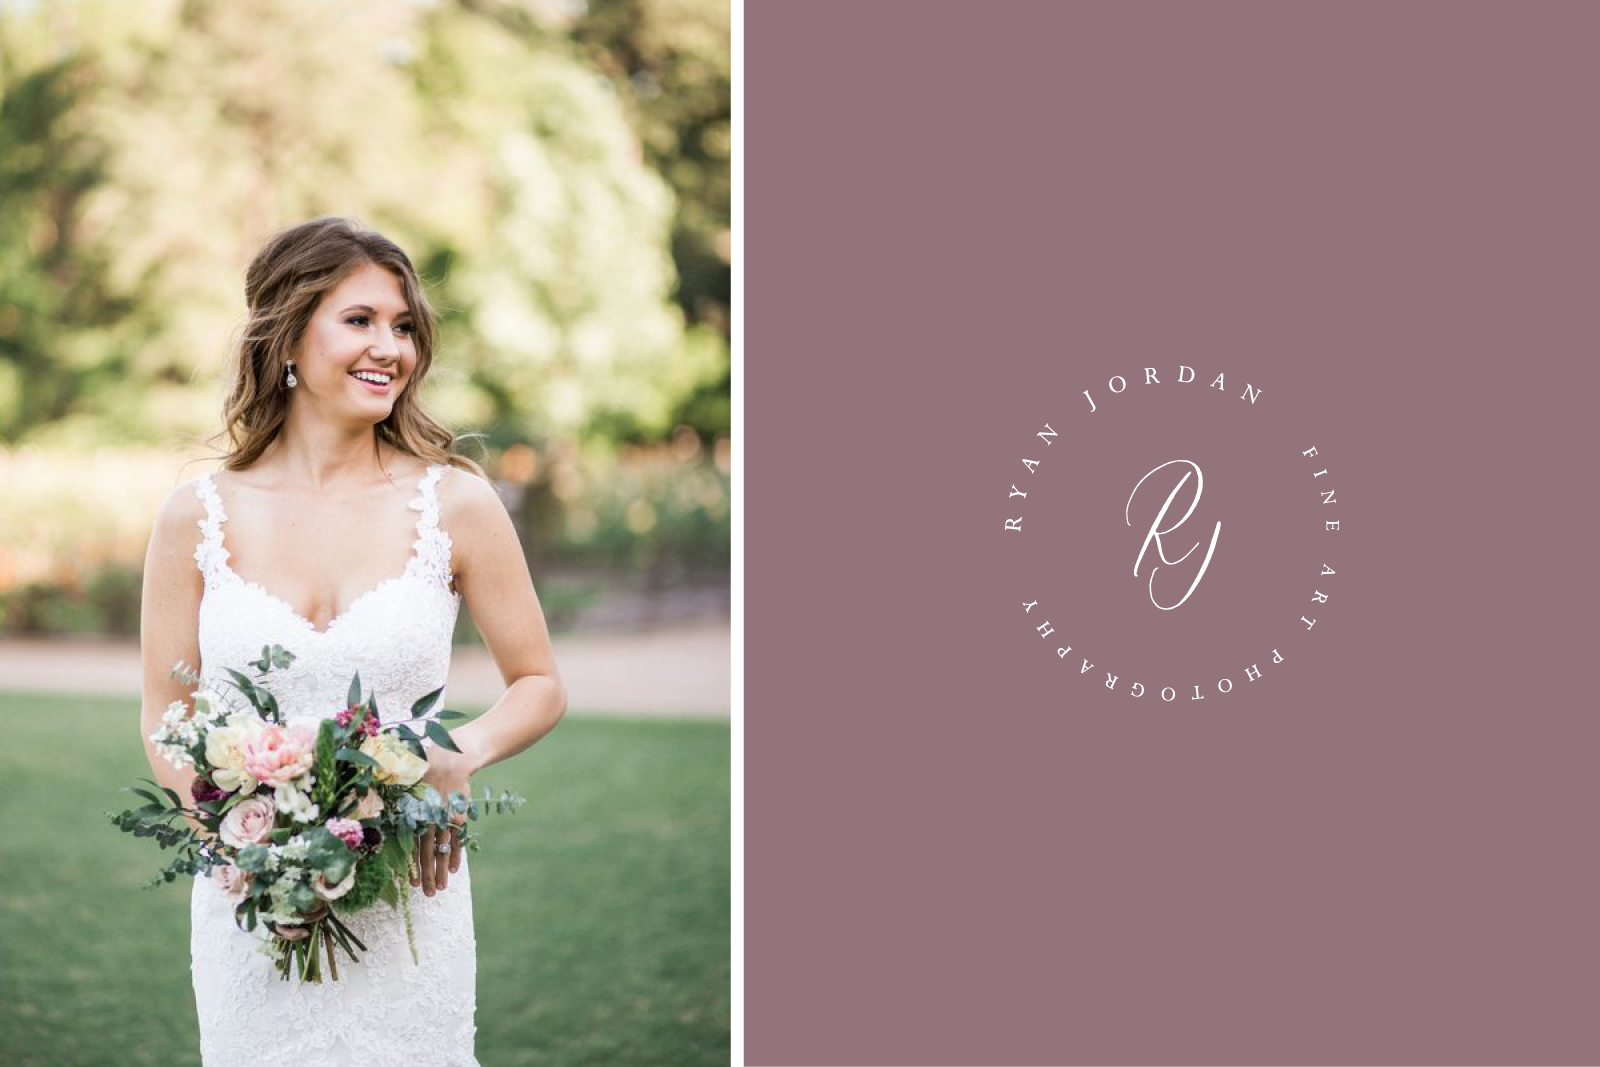 Wedding Photographer Branding // Ryan Jordan by Sarah Ann Design